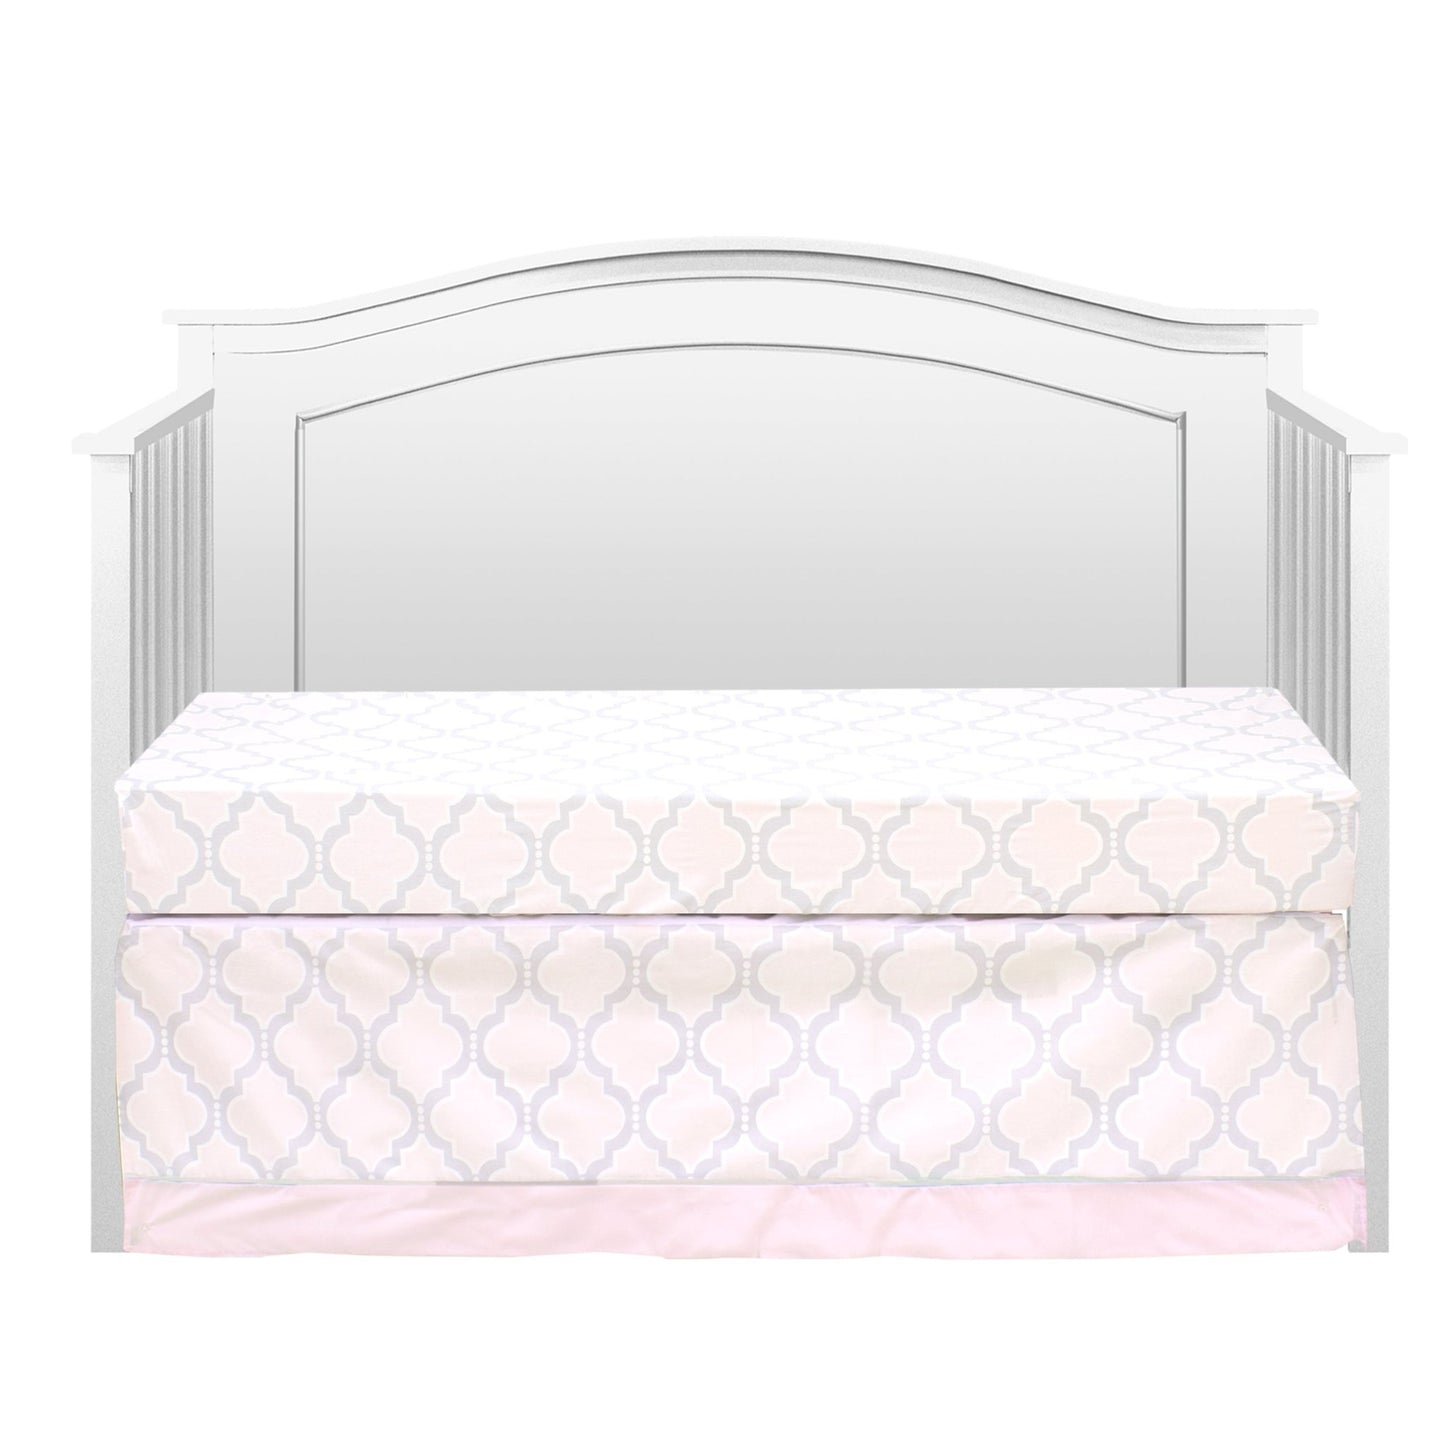 Pink Medallion 3 Piece Crib Bedding Set - New Arrivals Inc